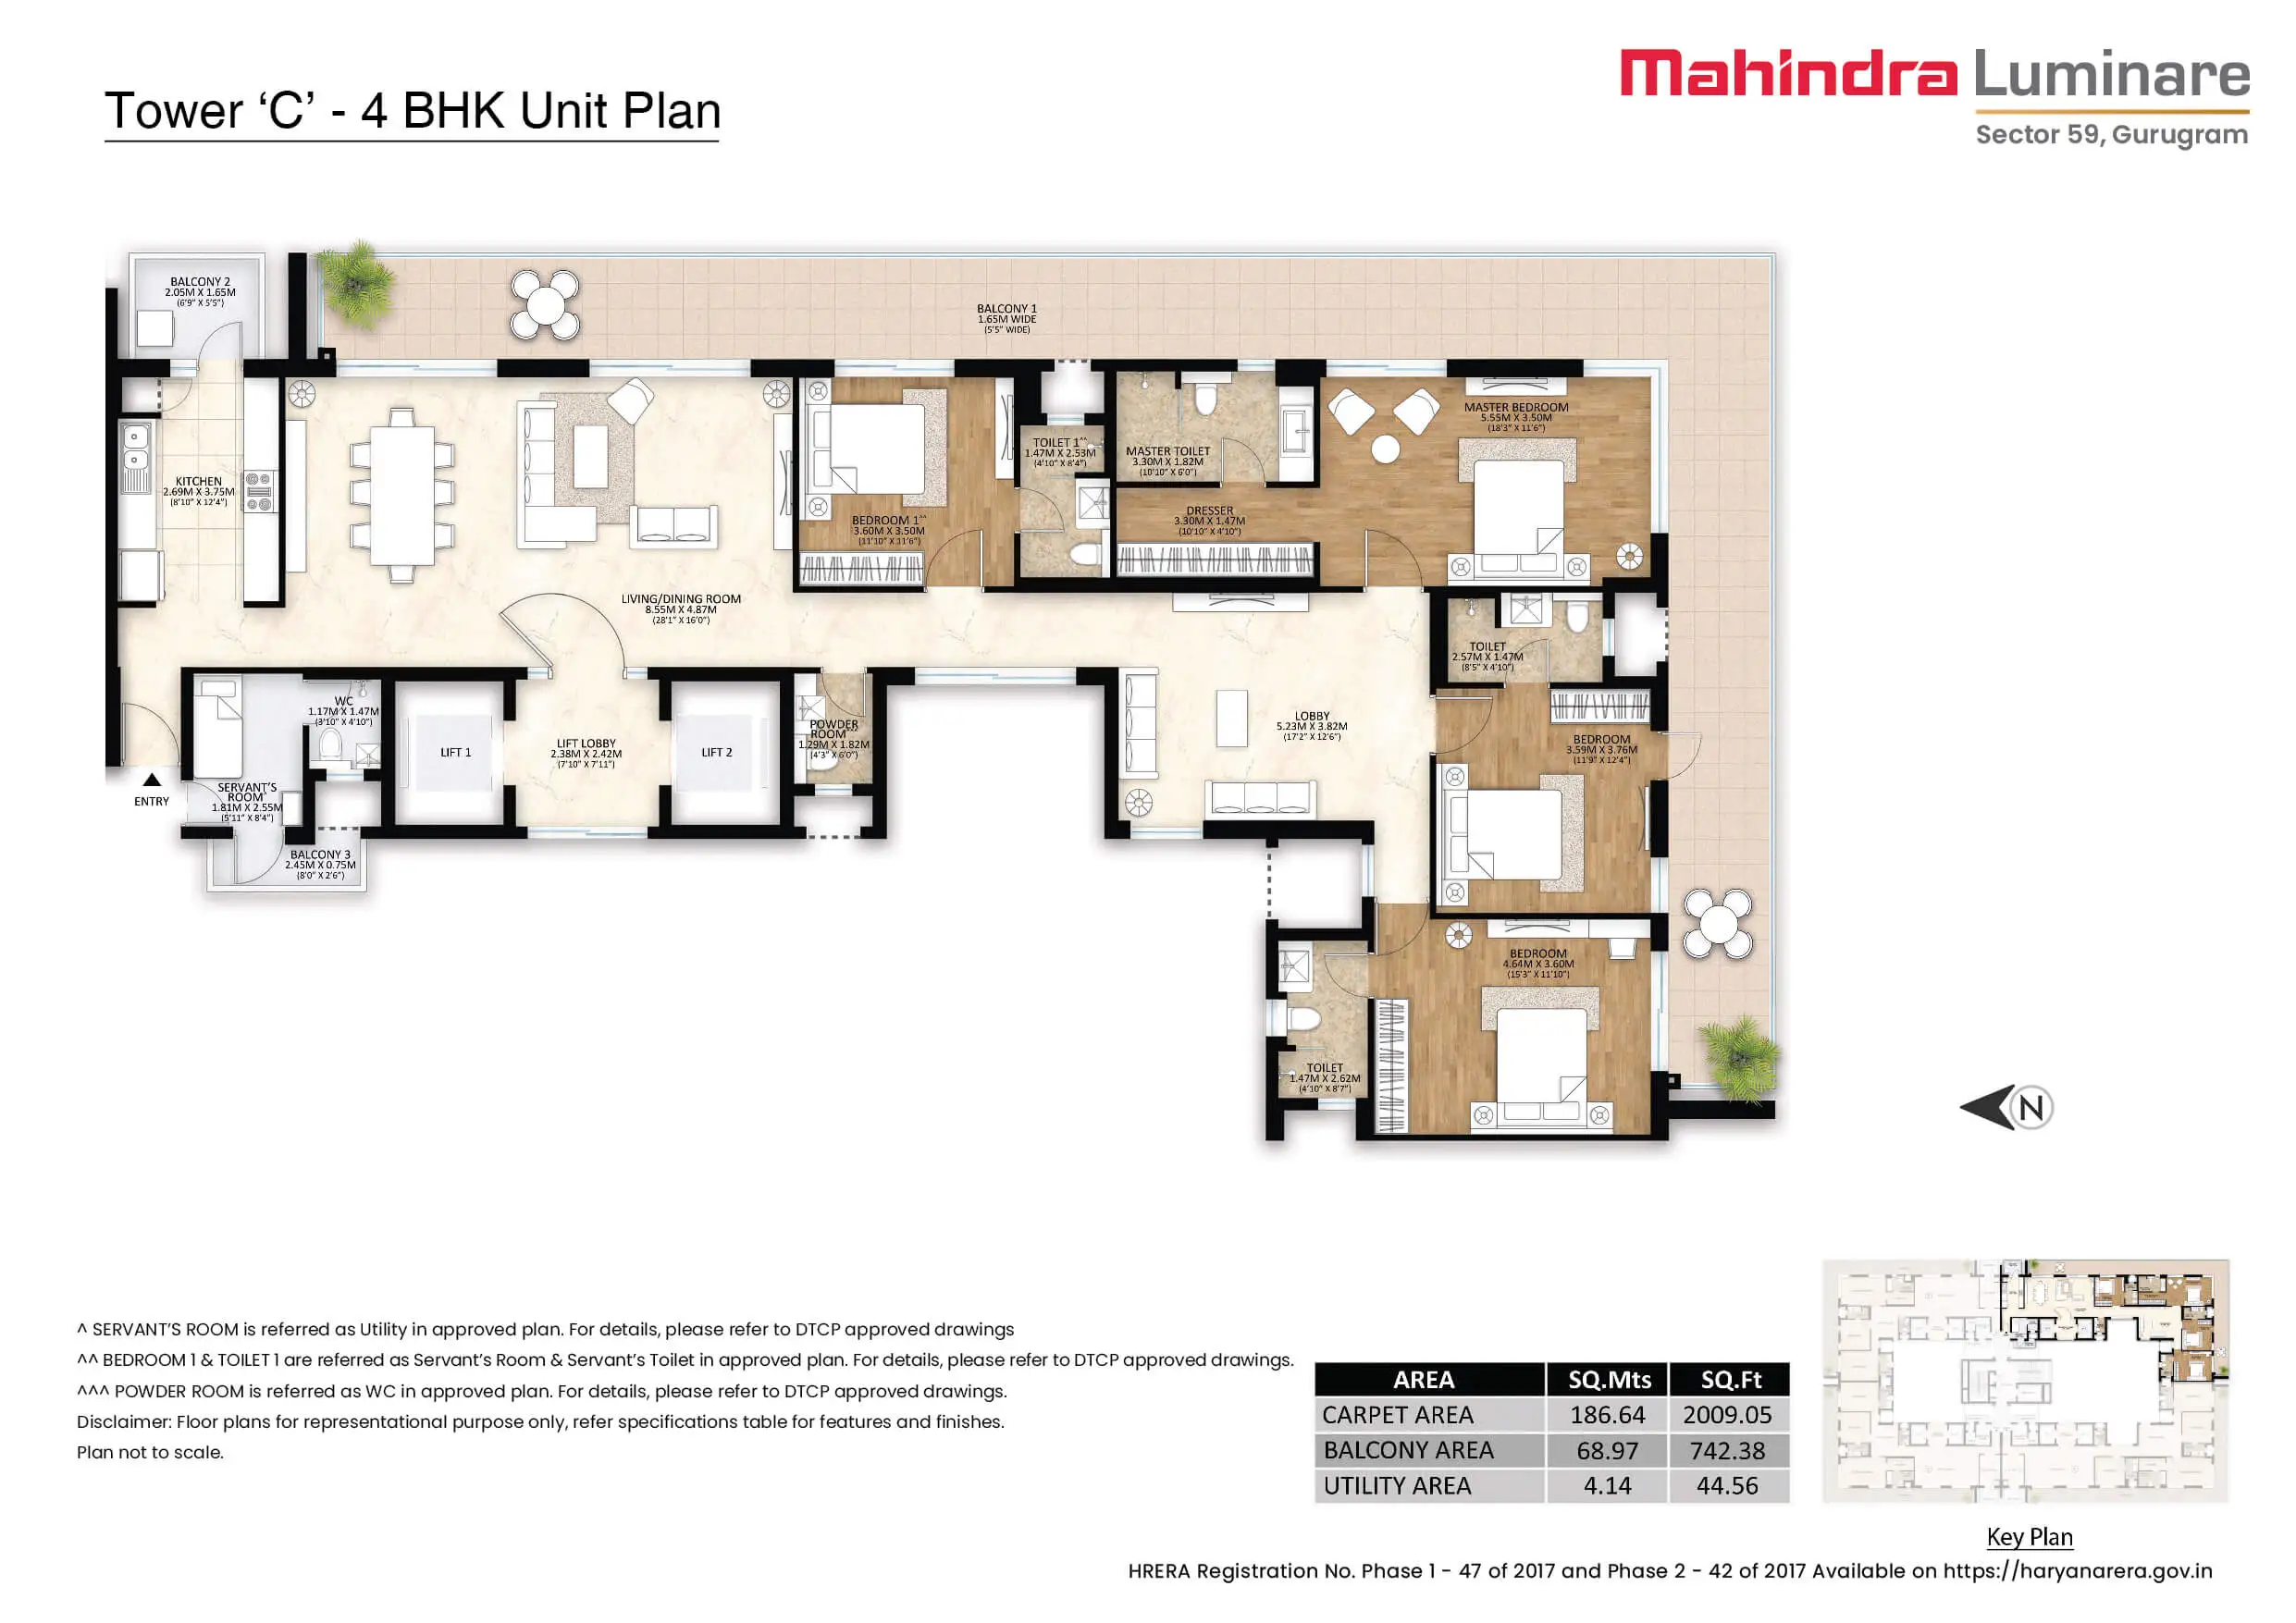 Mahindra Luminare 4 BHK Unit Plan